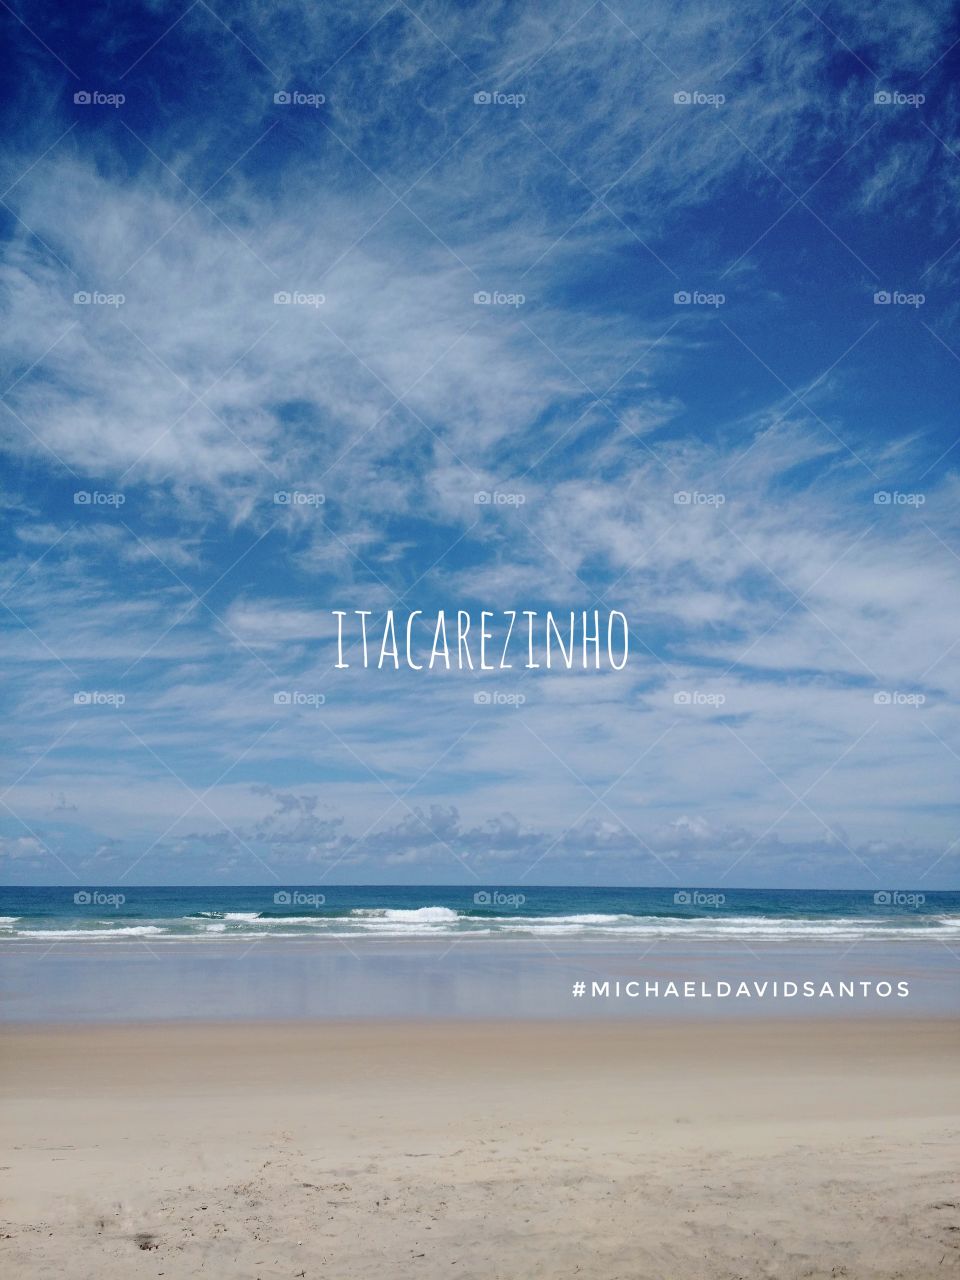 Praia Itacarezinho Beach